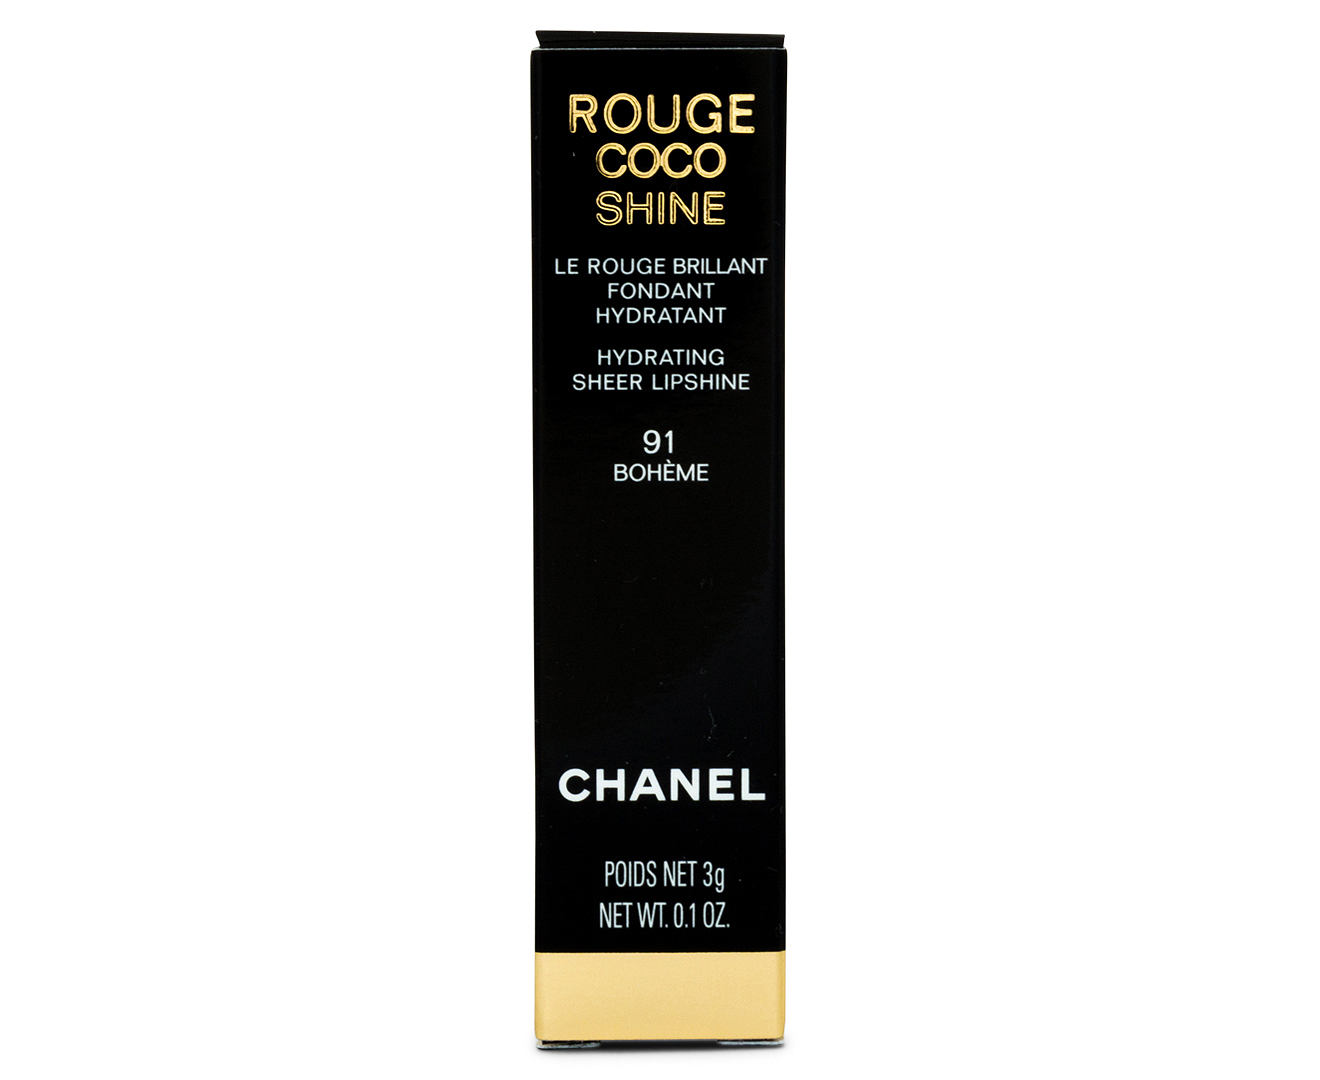 Chanel Rouge Coco Shine Hydrating Sheer Lipshine 3g - #91 Bohème